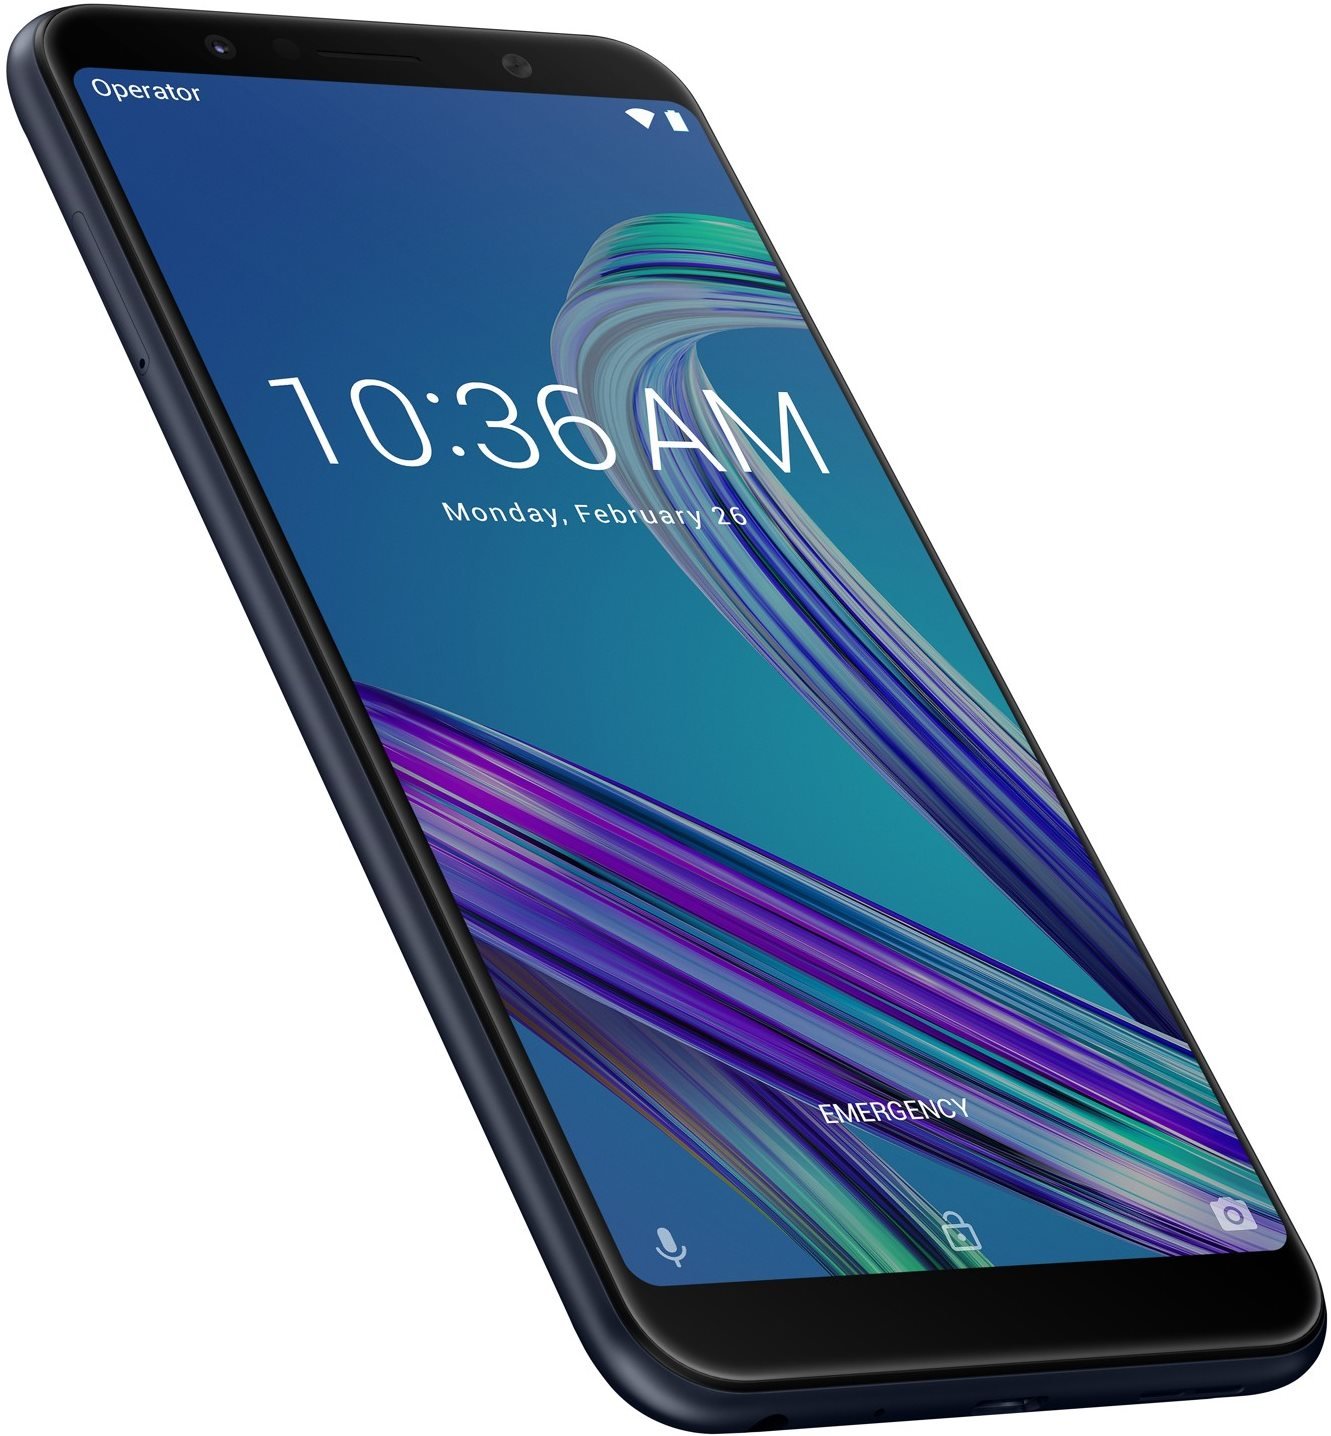 Asus Zenfone Max Pro M1 ZB602KL 128GB Black - Mobile Phone | Alza.cz